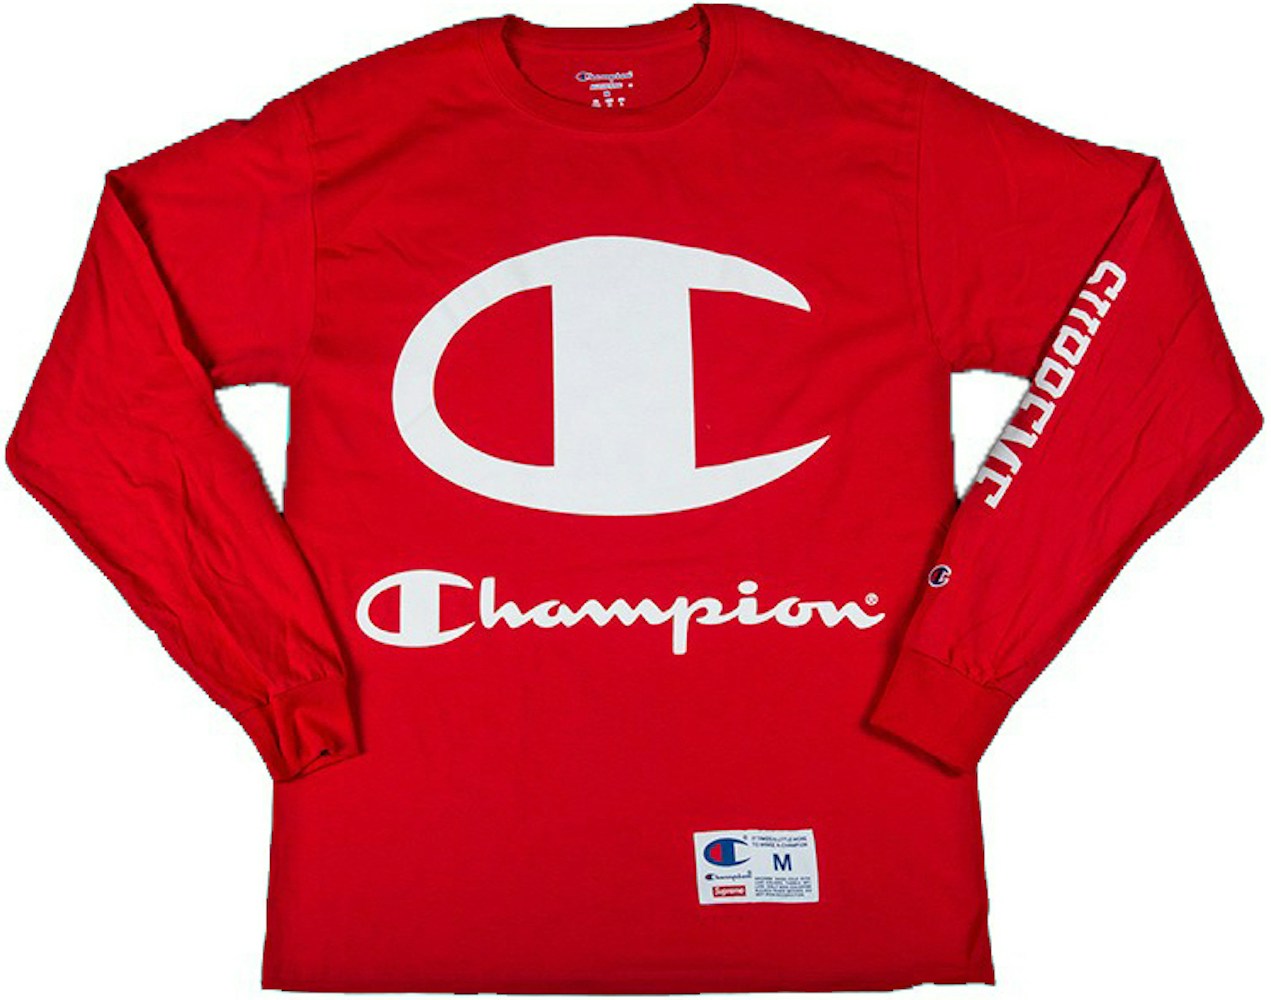 X Champion LS Tee Red - SS17